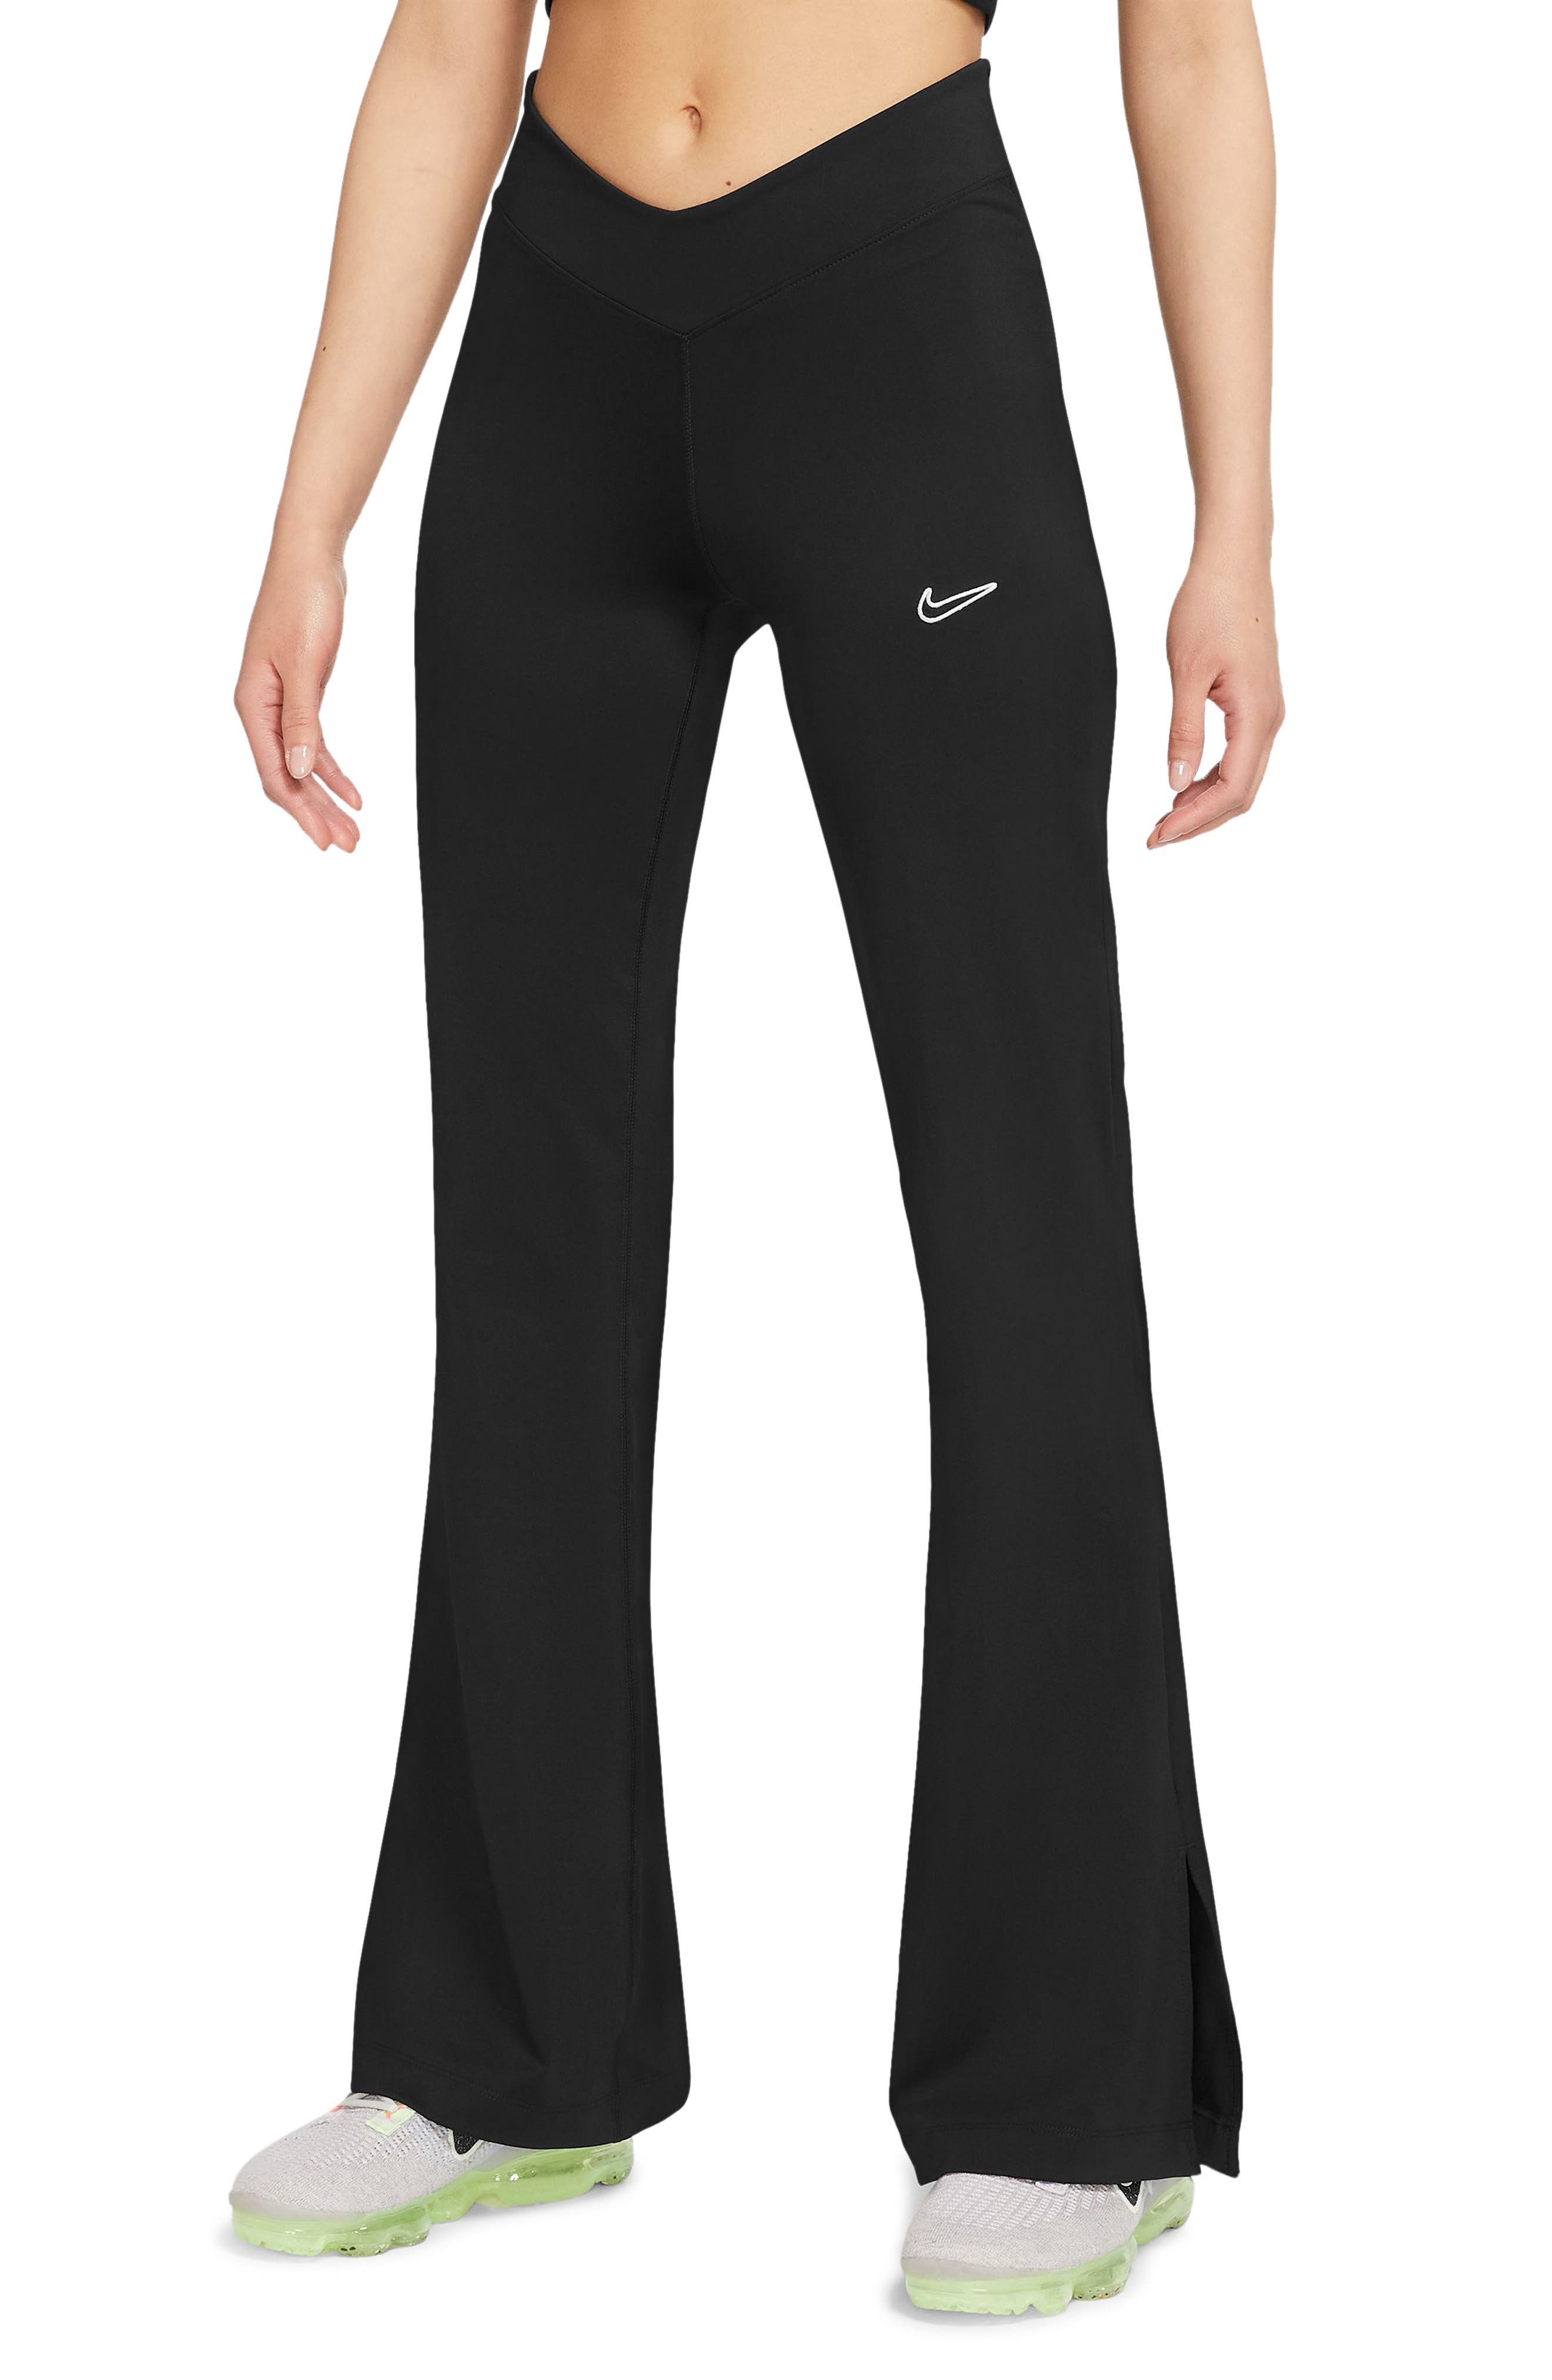 Nike Sportswear Mid Rise Flare Leggings in Black/White